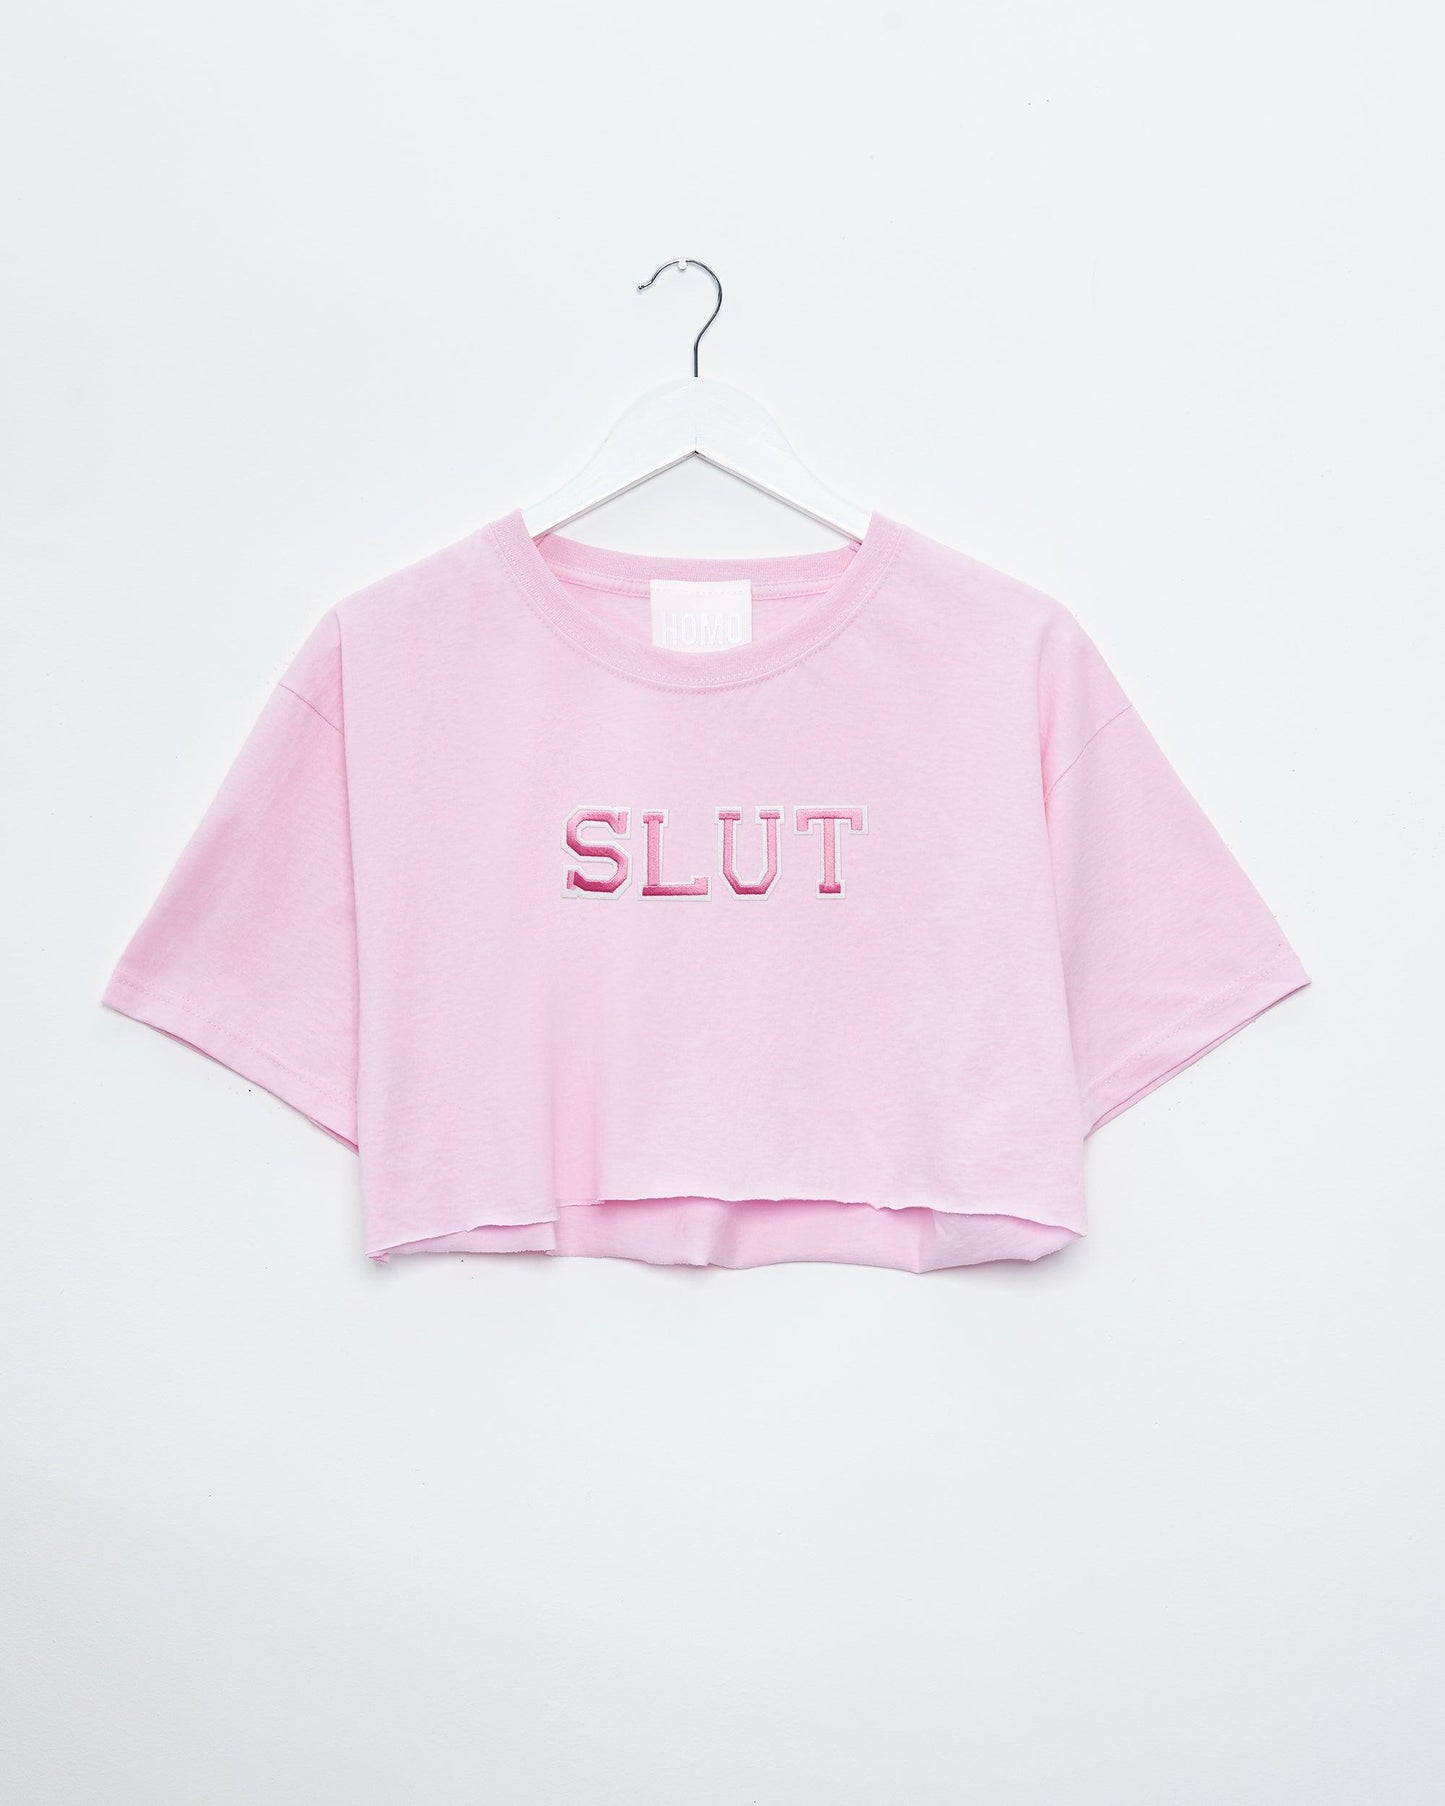 Varsity style slut embroidery on pink - mens crop top.